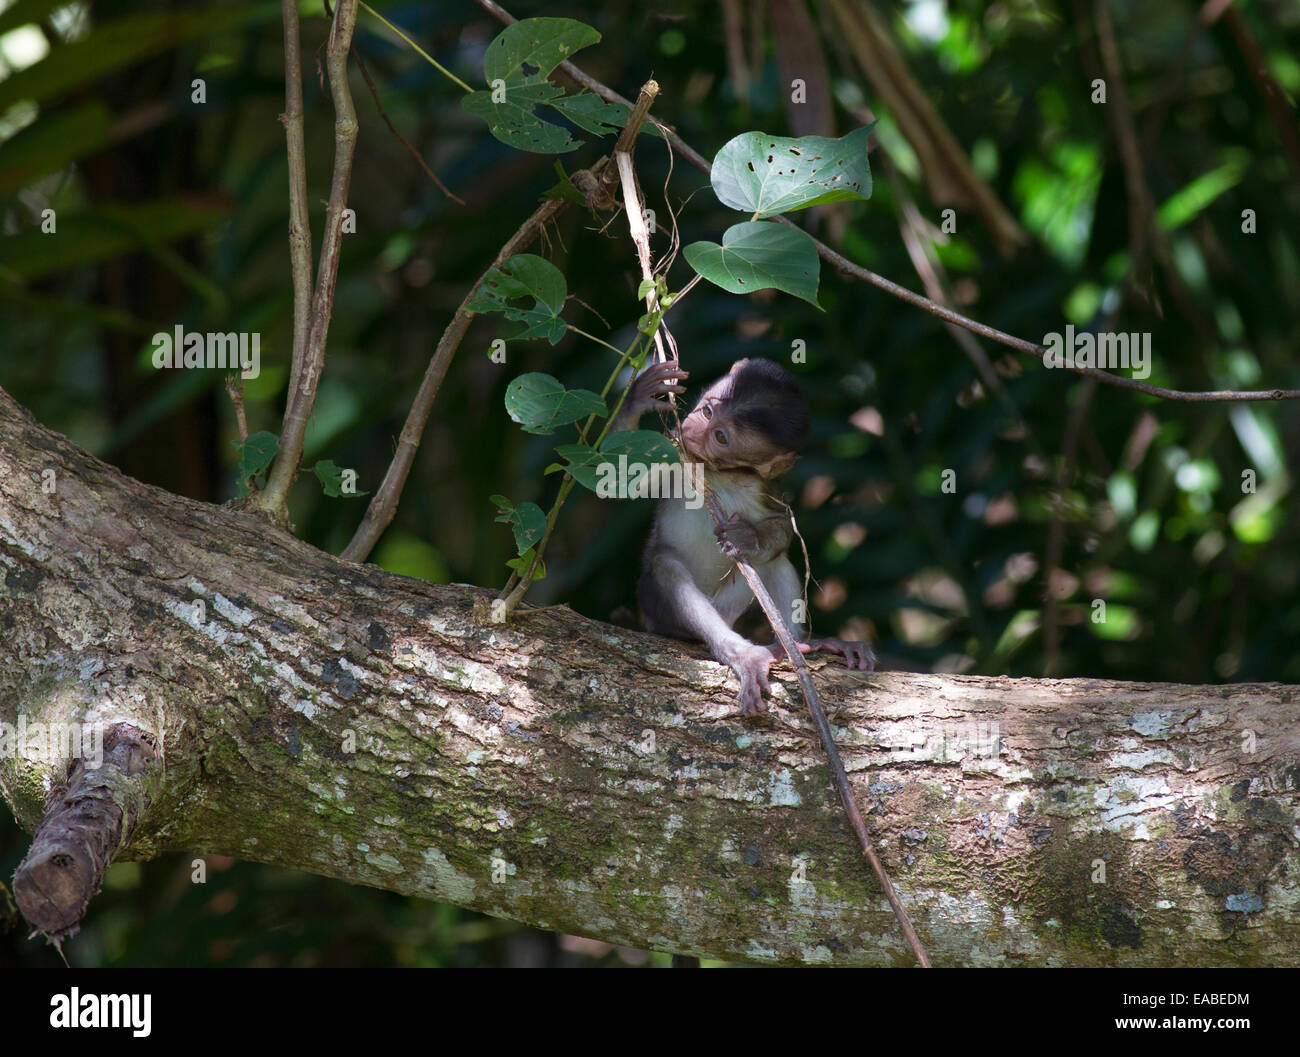 Manger du crabe - Macaca fascicularis macaque - bébé, parc national de Bako, Sarawak, Malaisie Banque D'Images